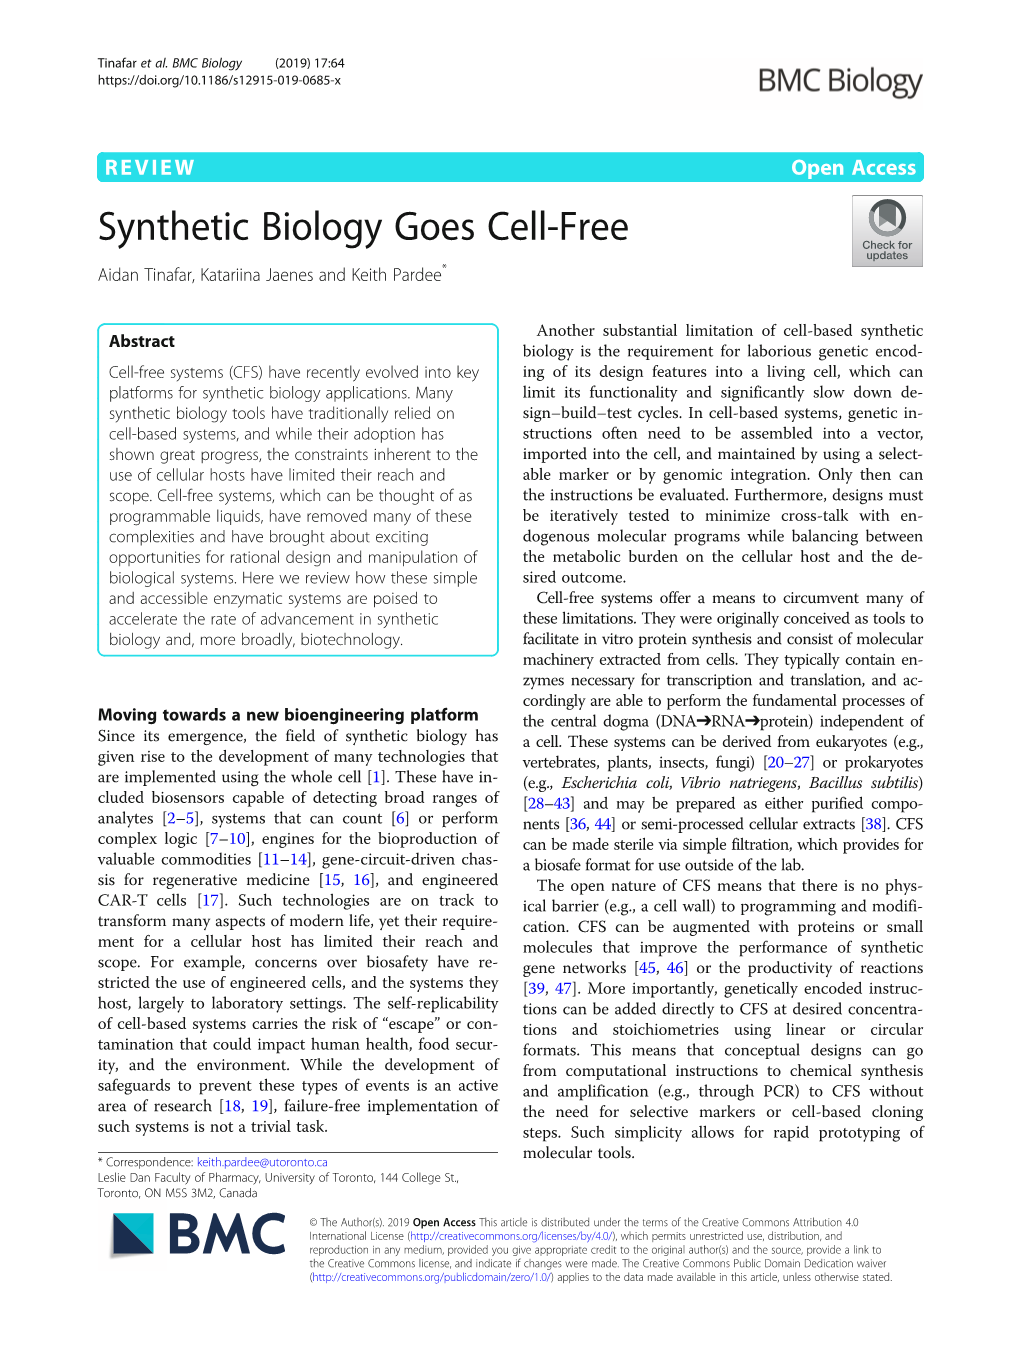 Synthetic Biology Goes Cell-Free Aidan Tinafar, Katariina Jaenes and Keith Pardee*